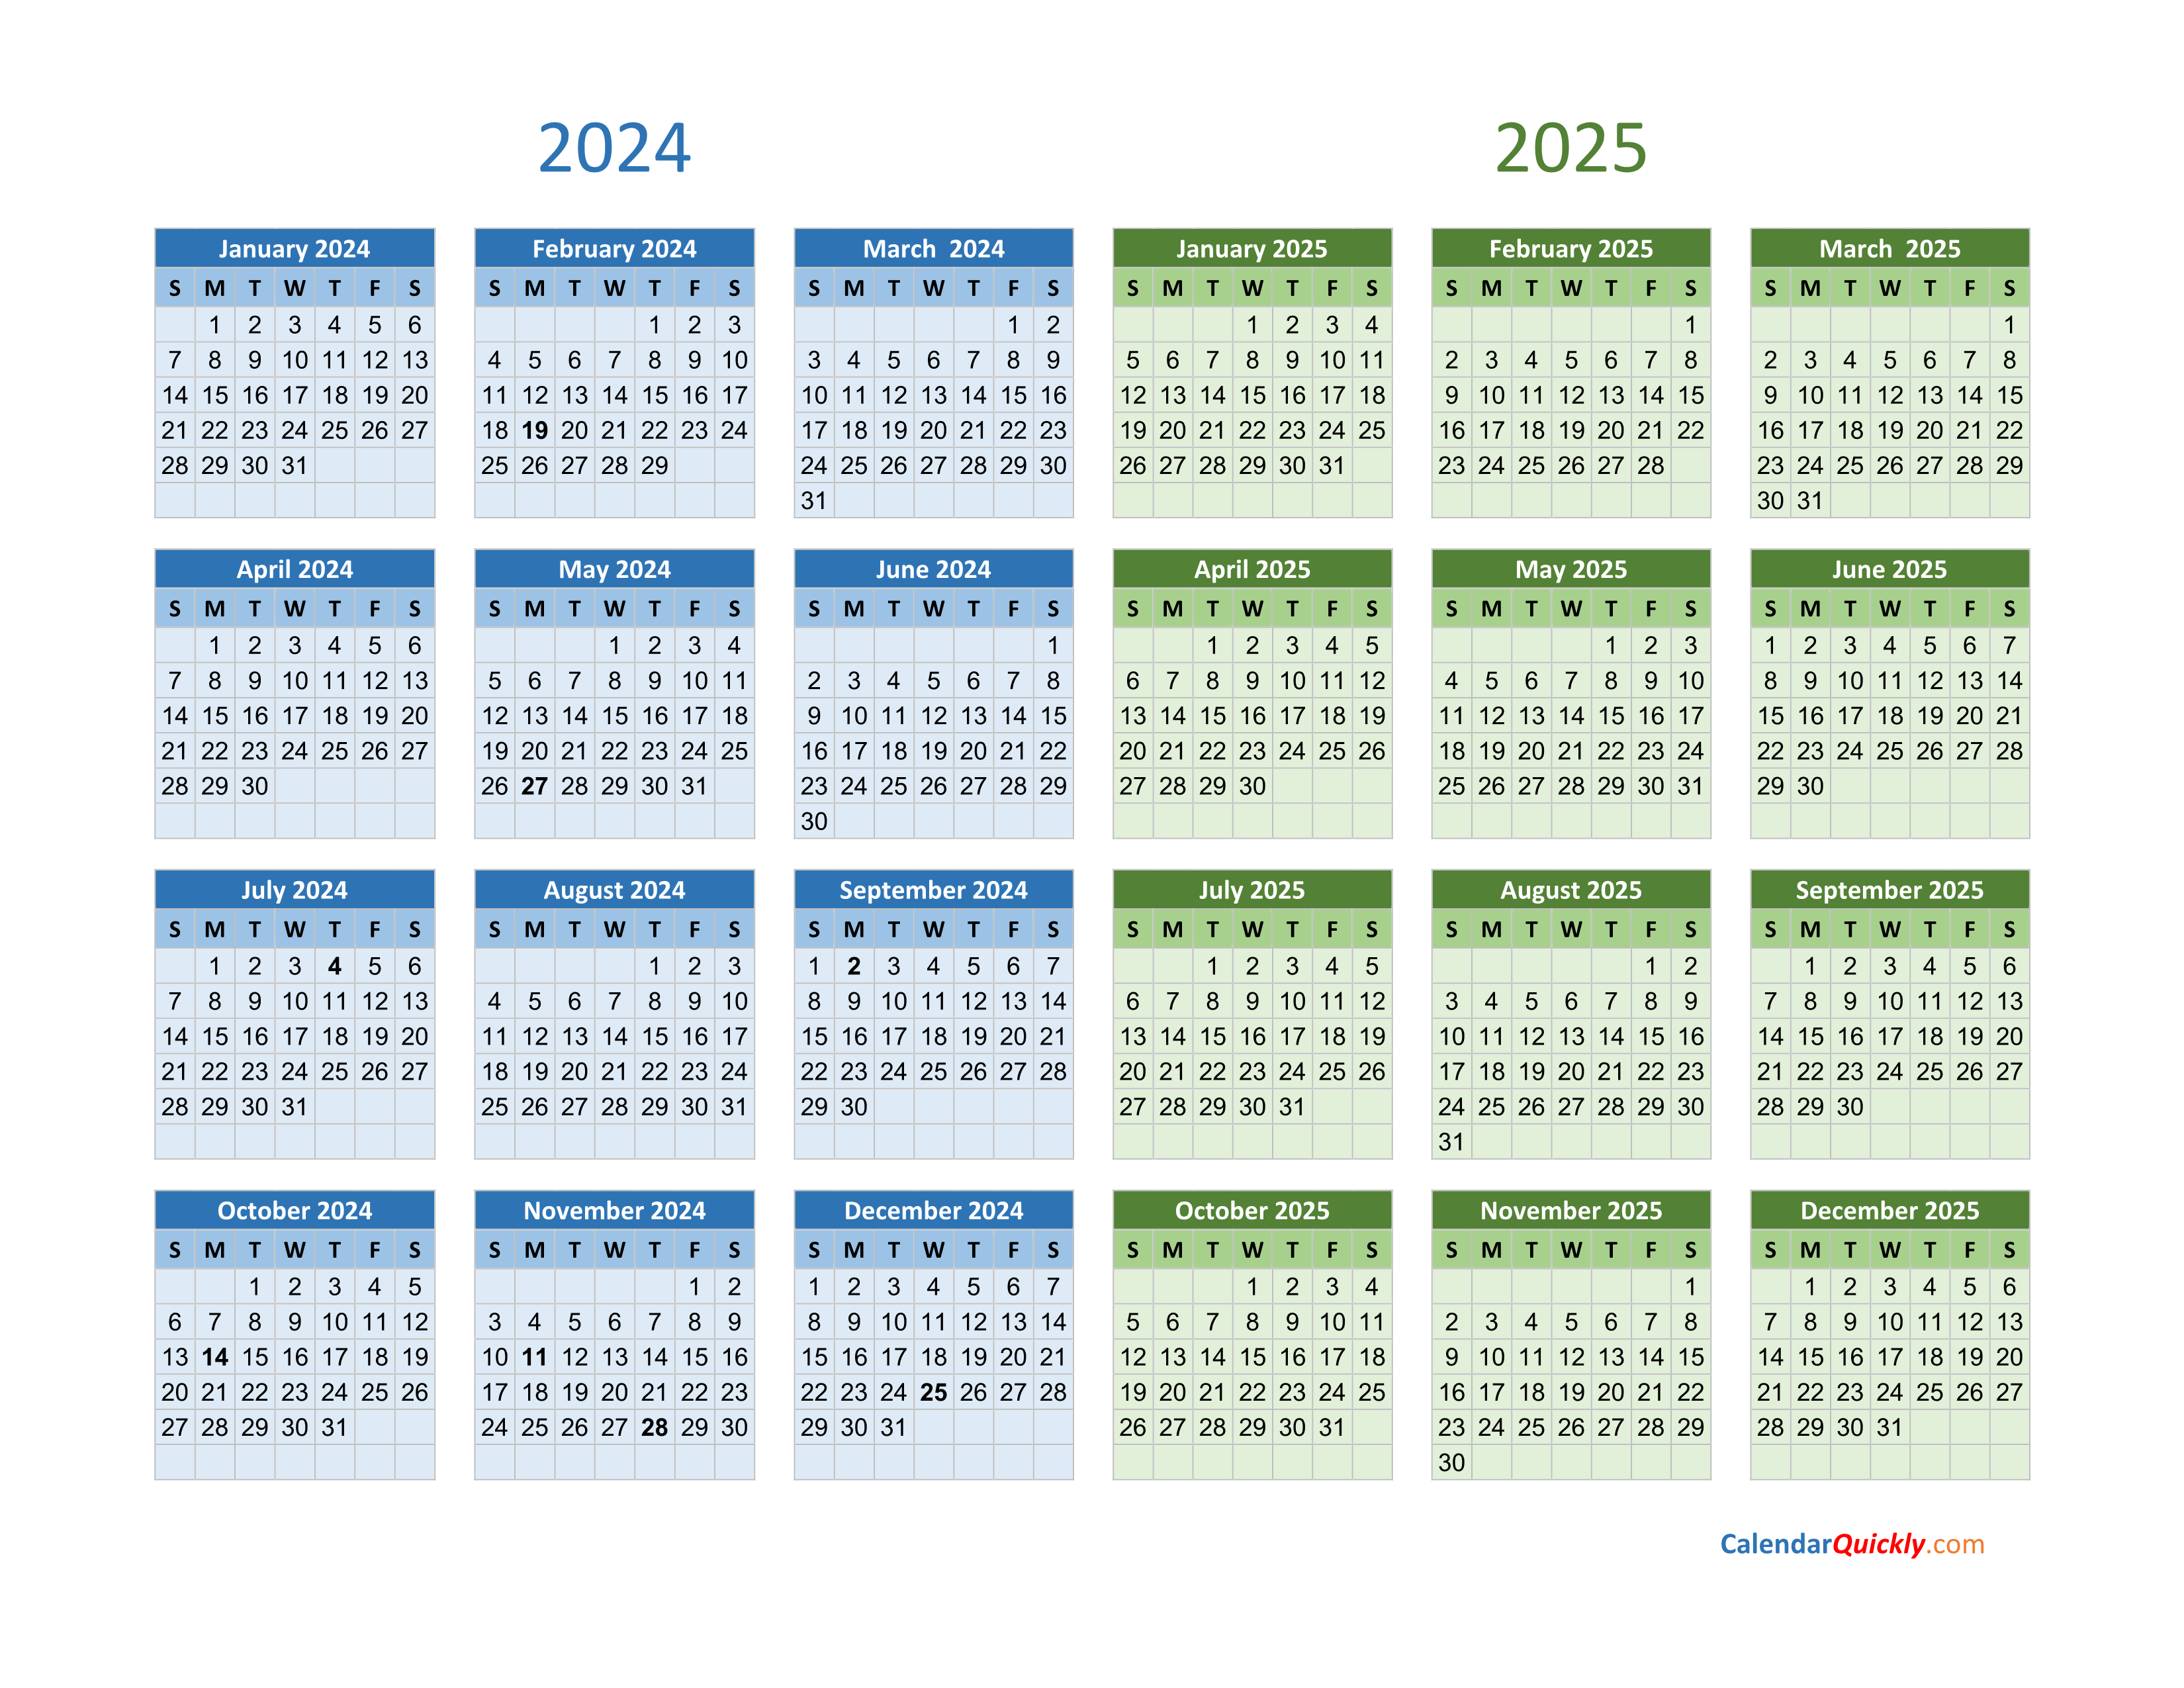 2024 And 2025 Calendar | Calendar Quickly regarding June 2024 - June 2025 Calendar